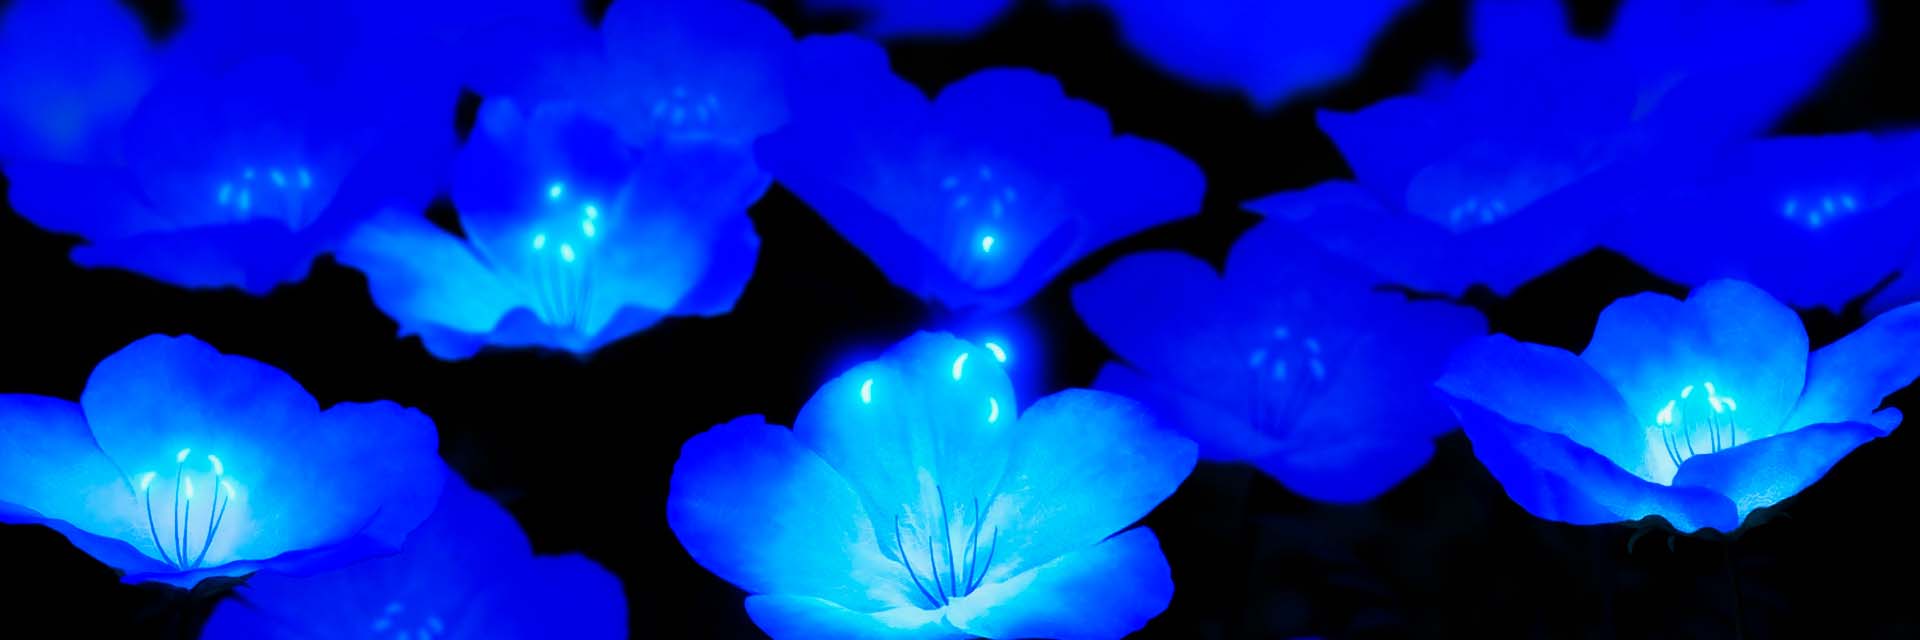 синие цветы 1920 640